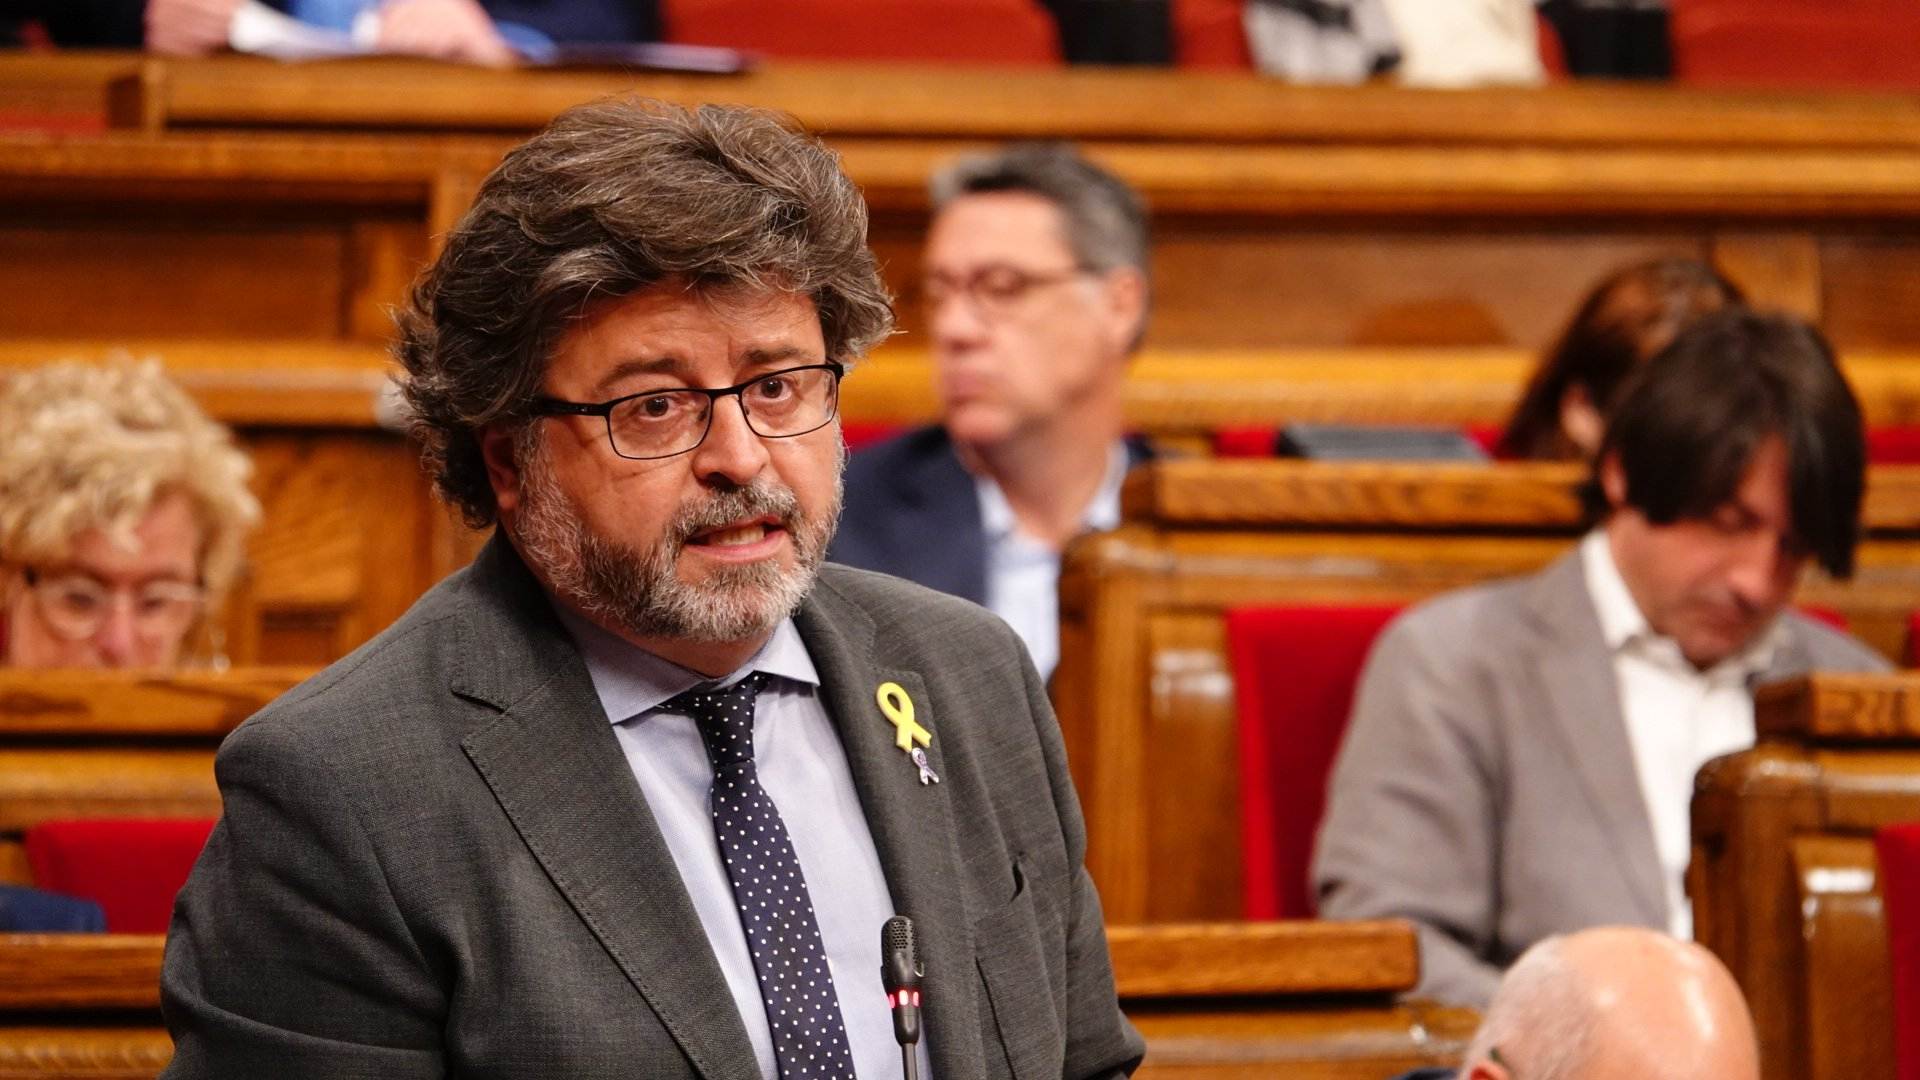 Toni Castellà, a Tardà: "Hace falta más lealtad al mandato del 1-O"